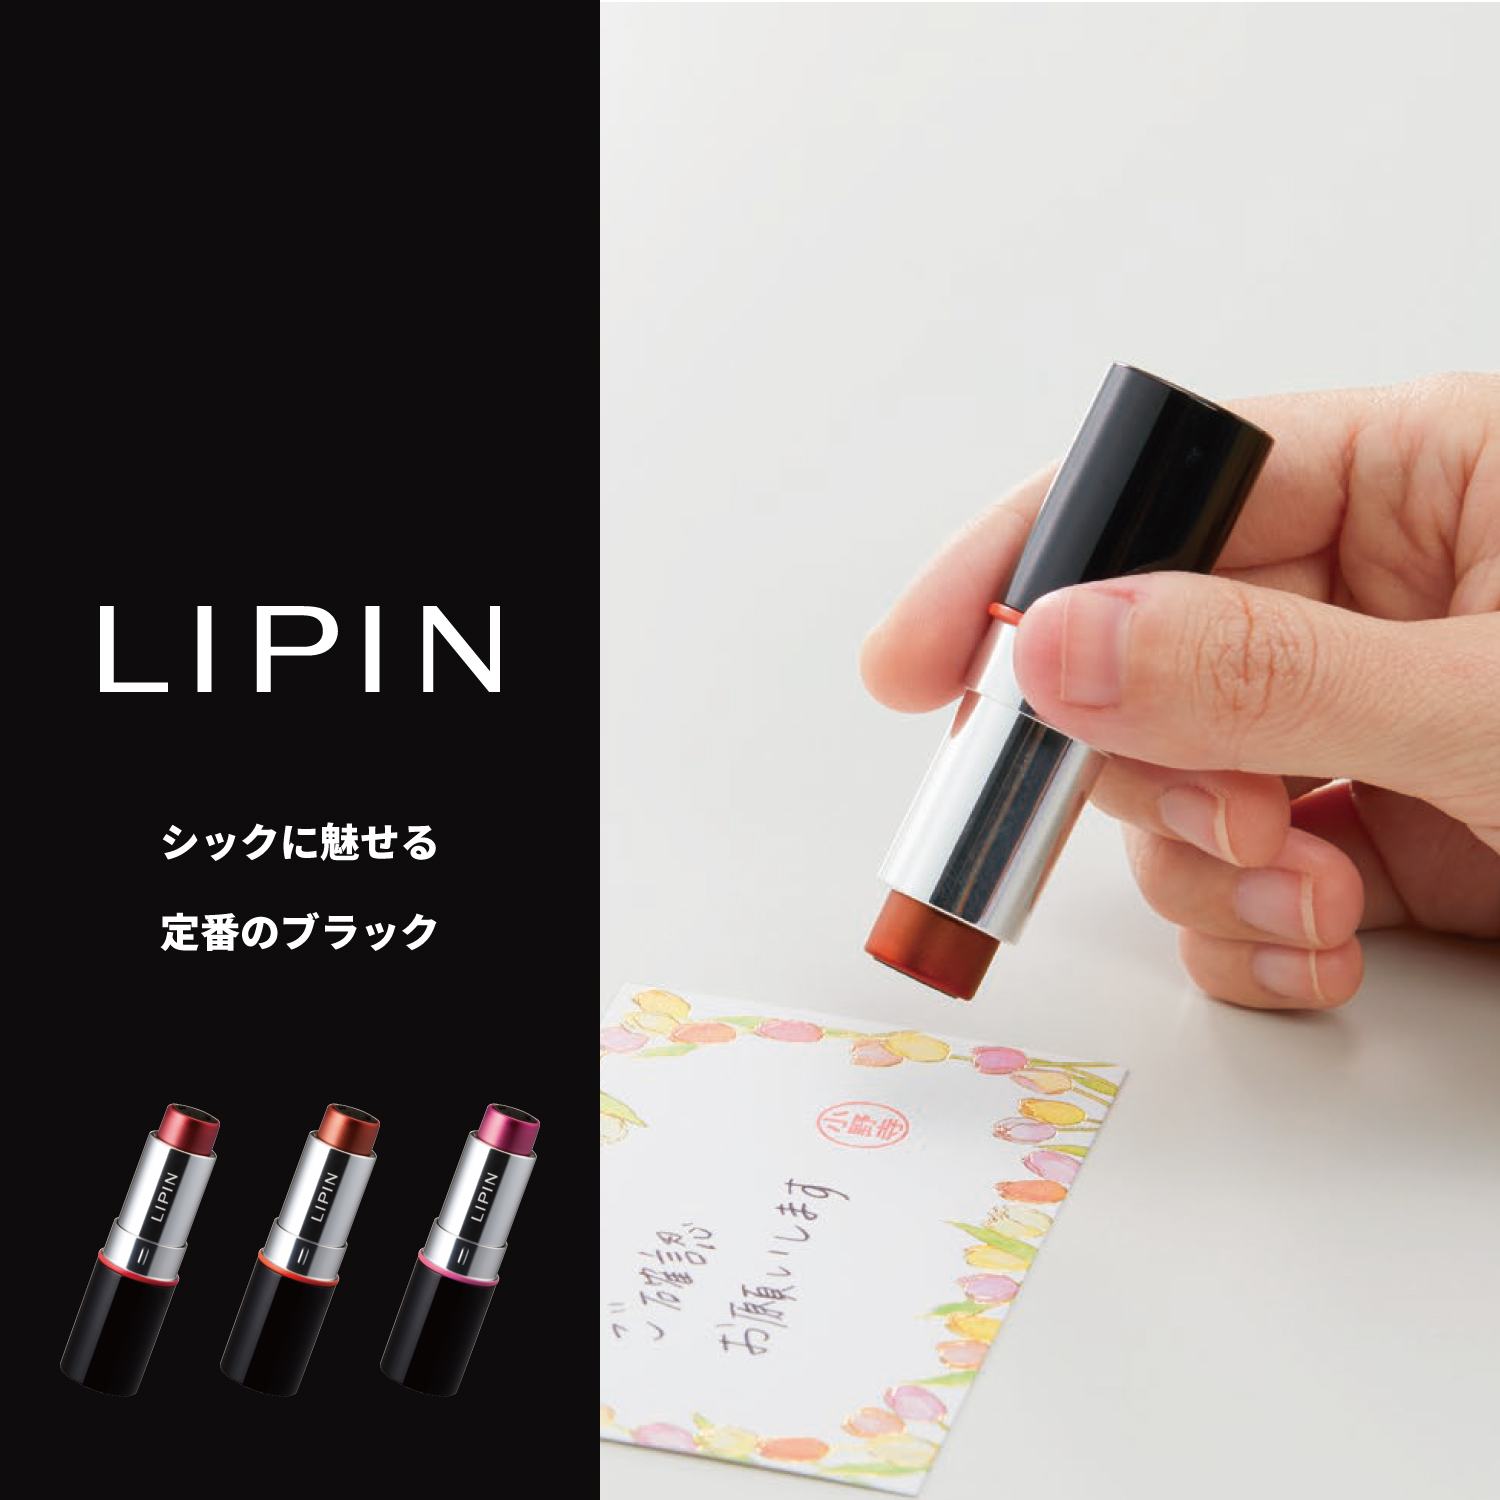 LIPIN+専用補充インキセット【本体色:ブラック/インキ色:プラムピンク】_6